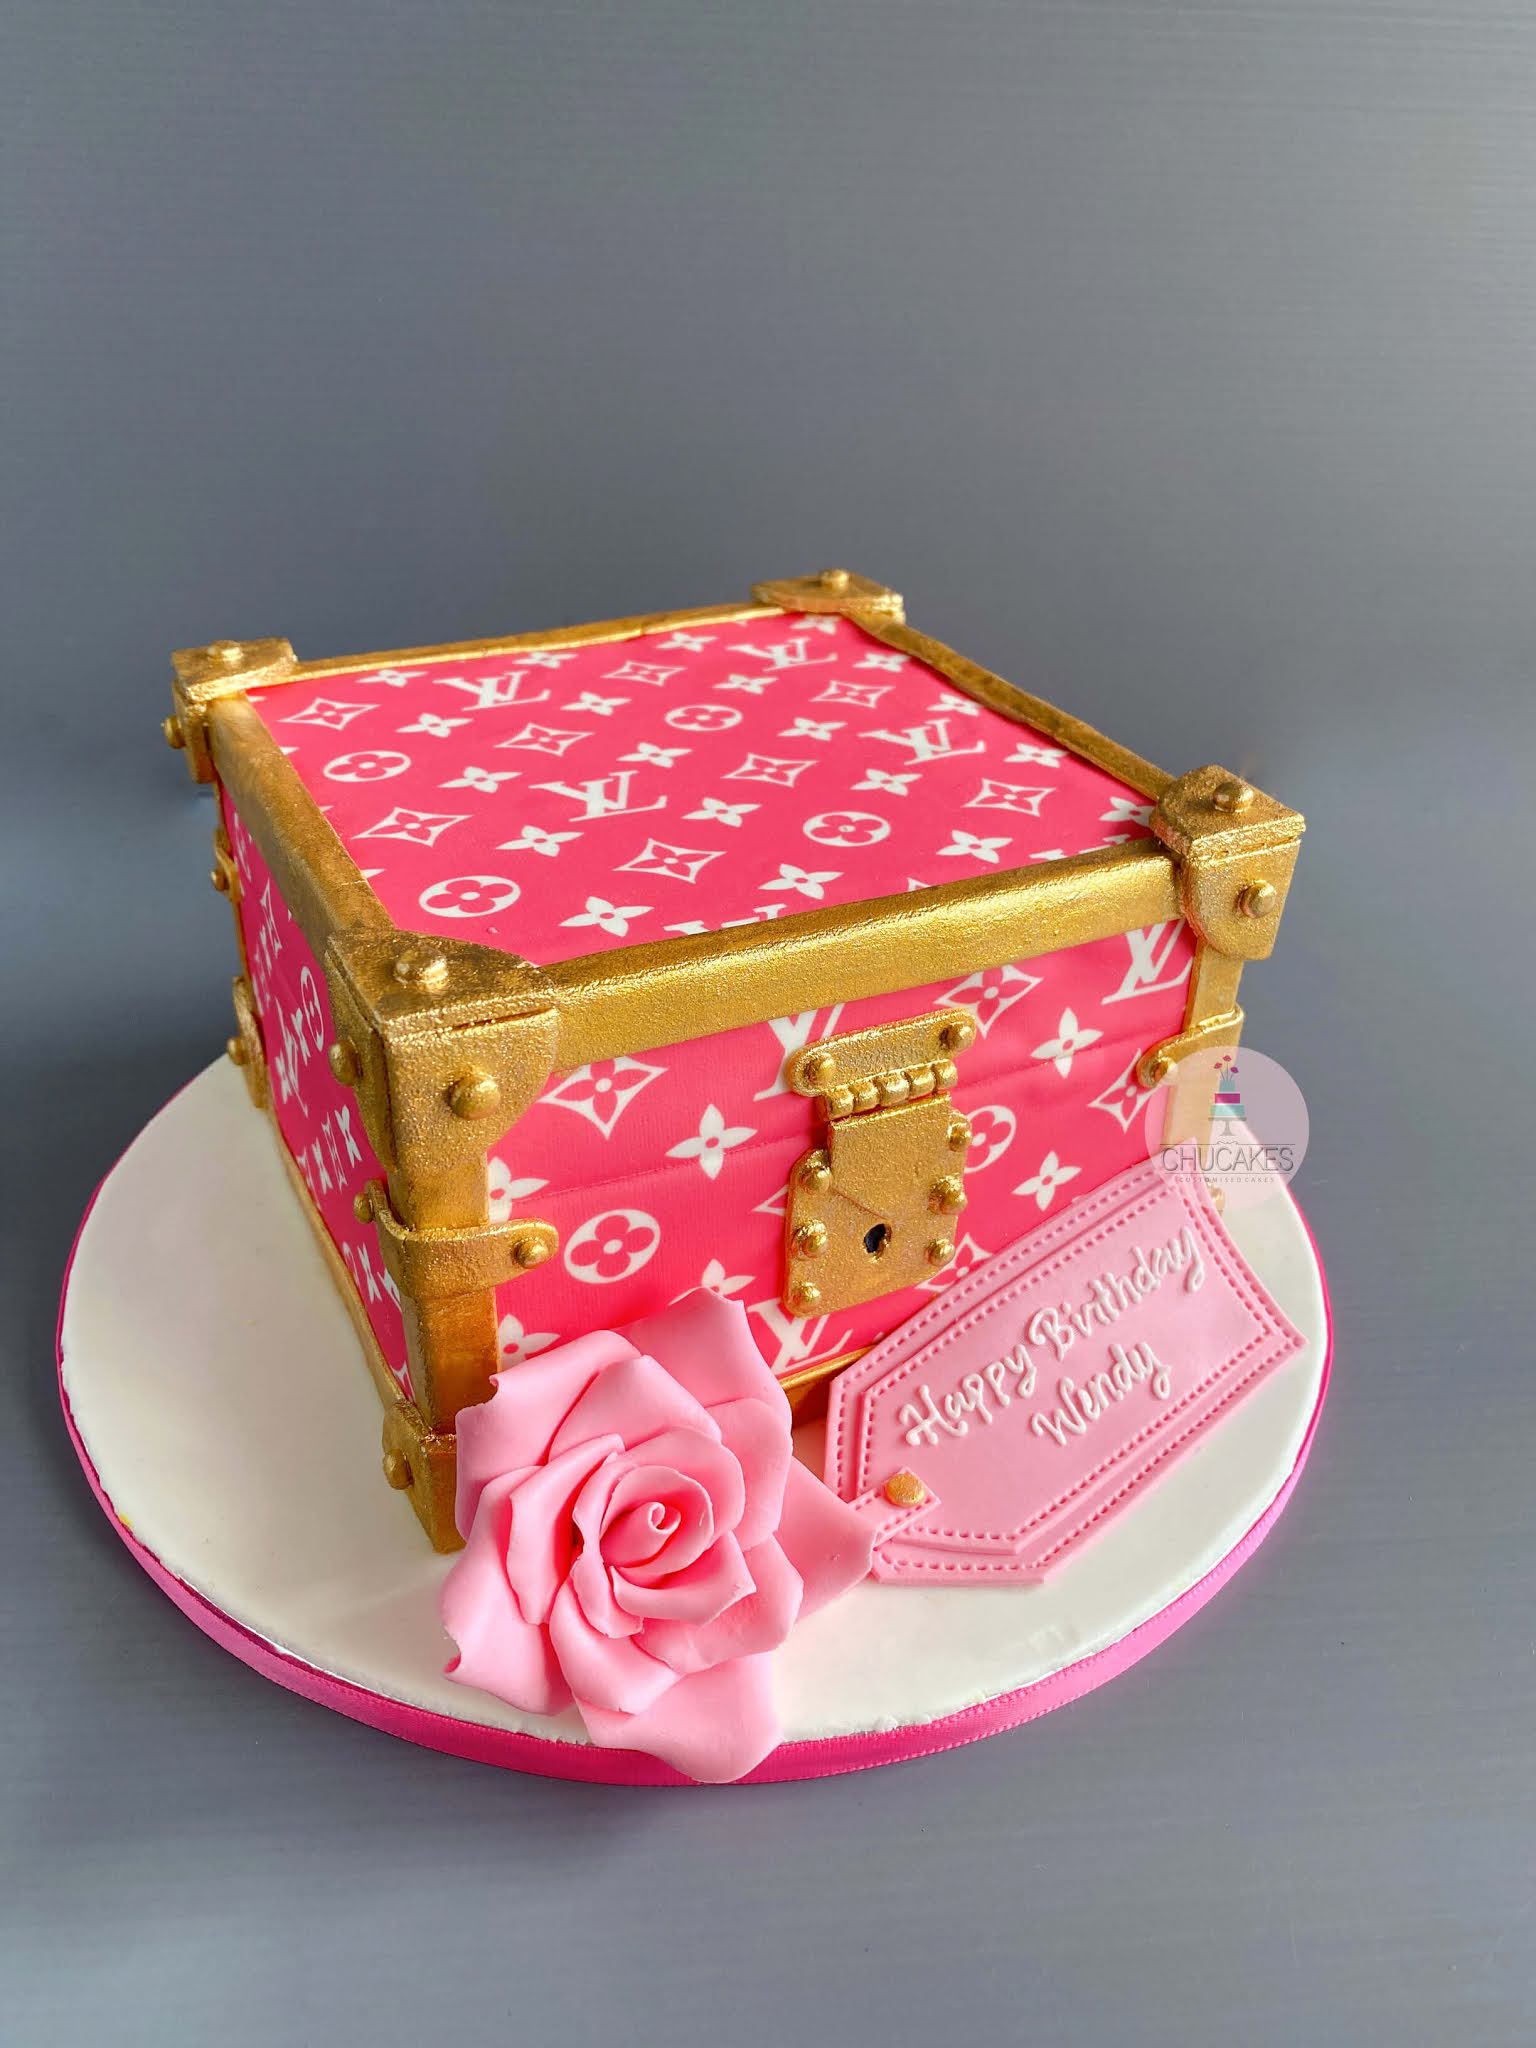 CHUCAKES : Pink LV Box Cake